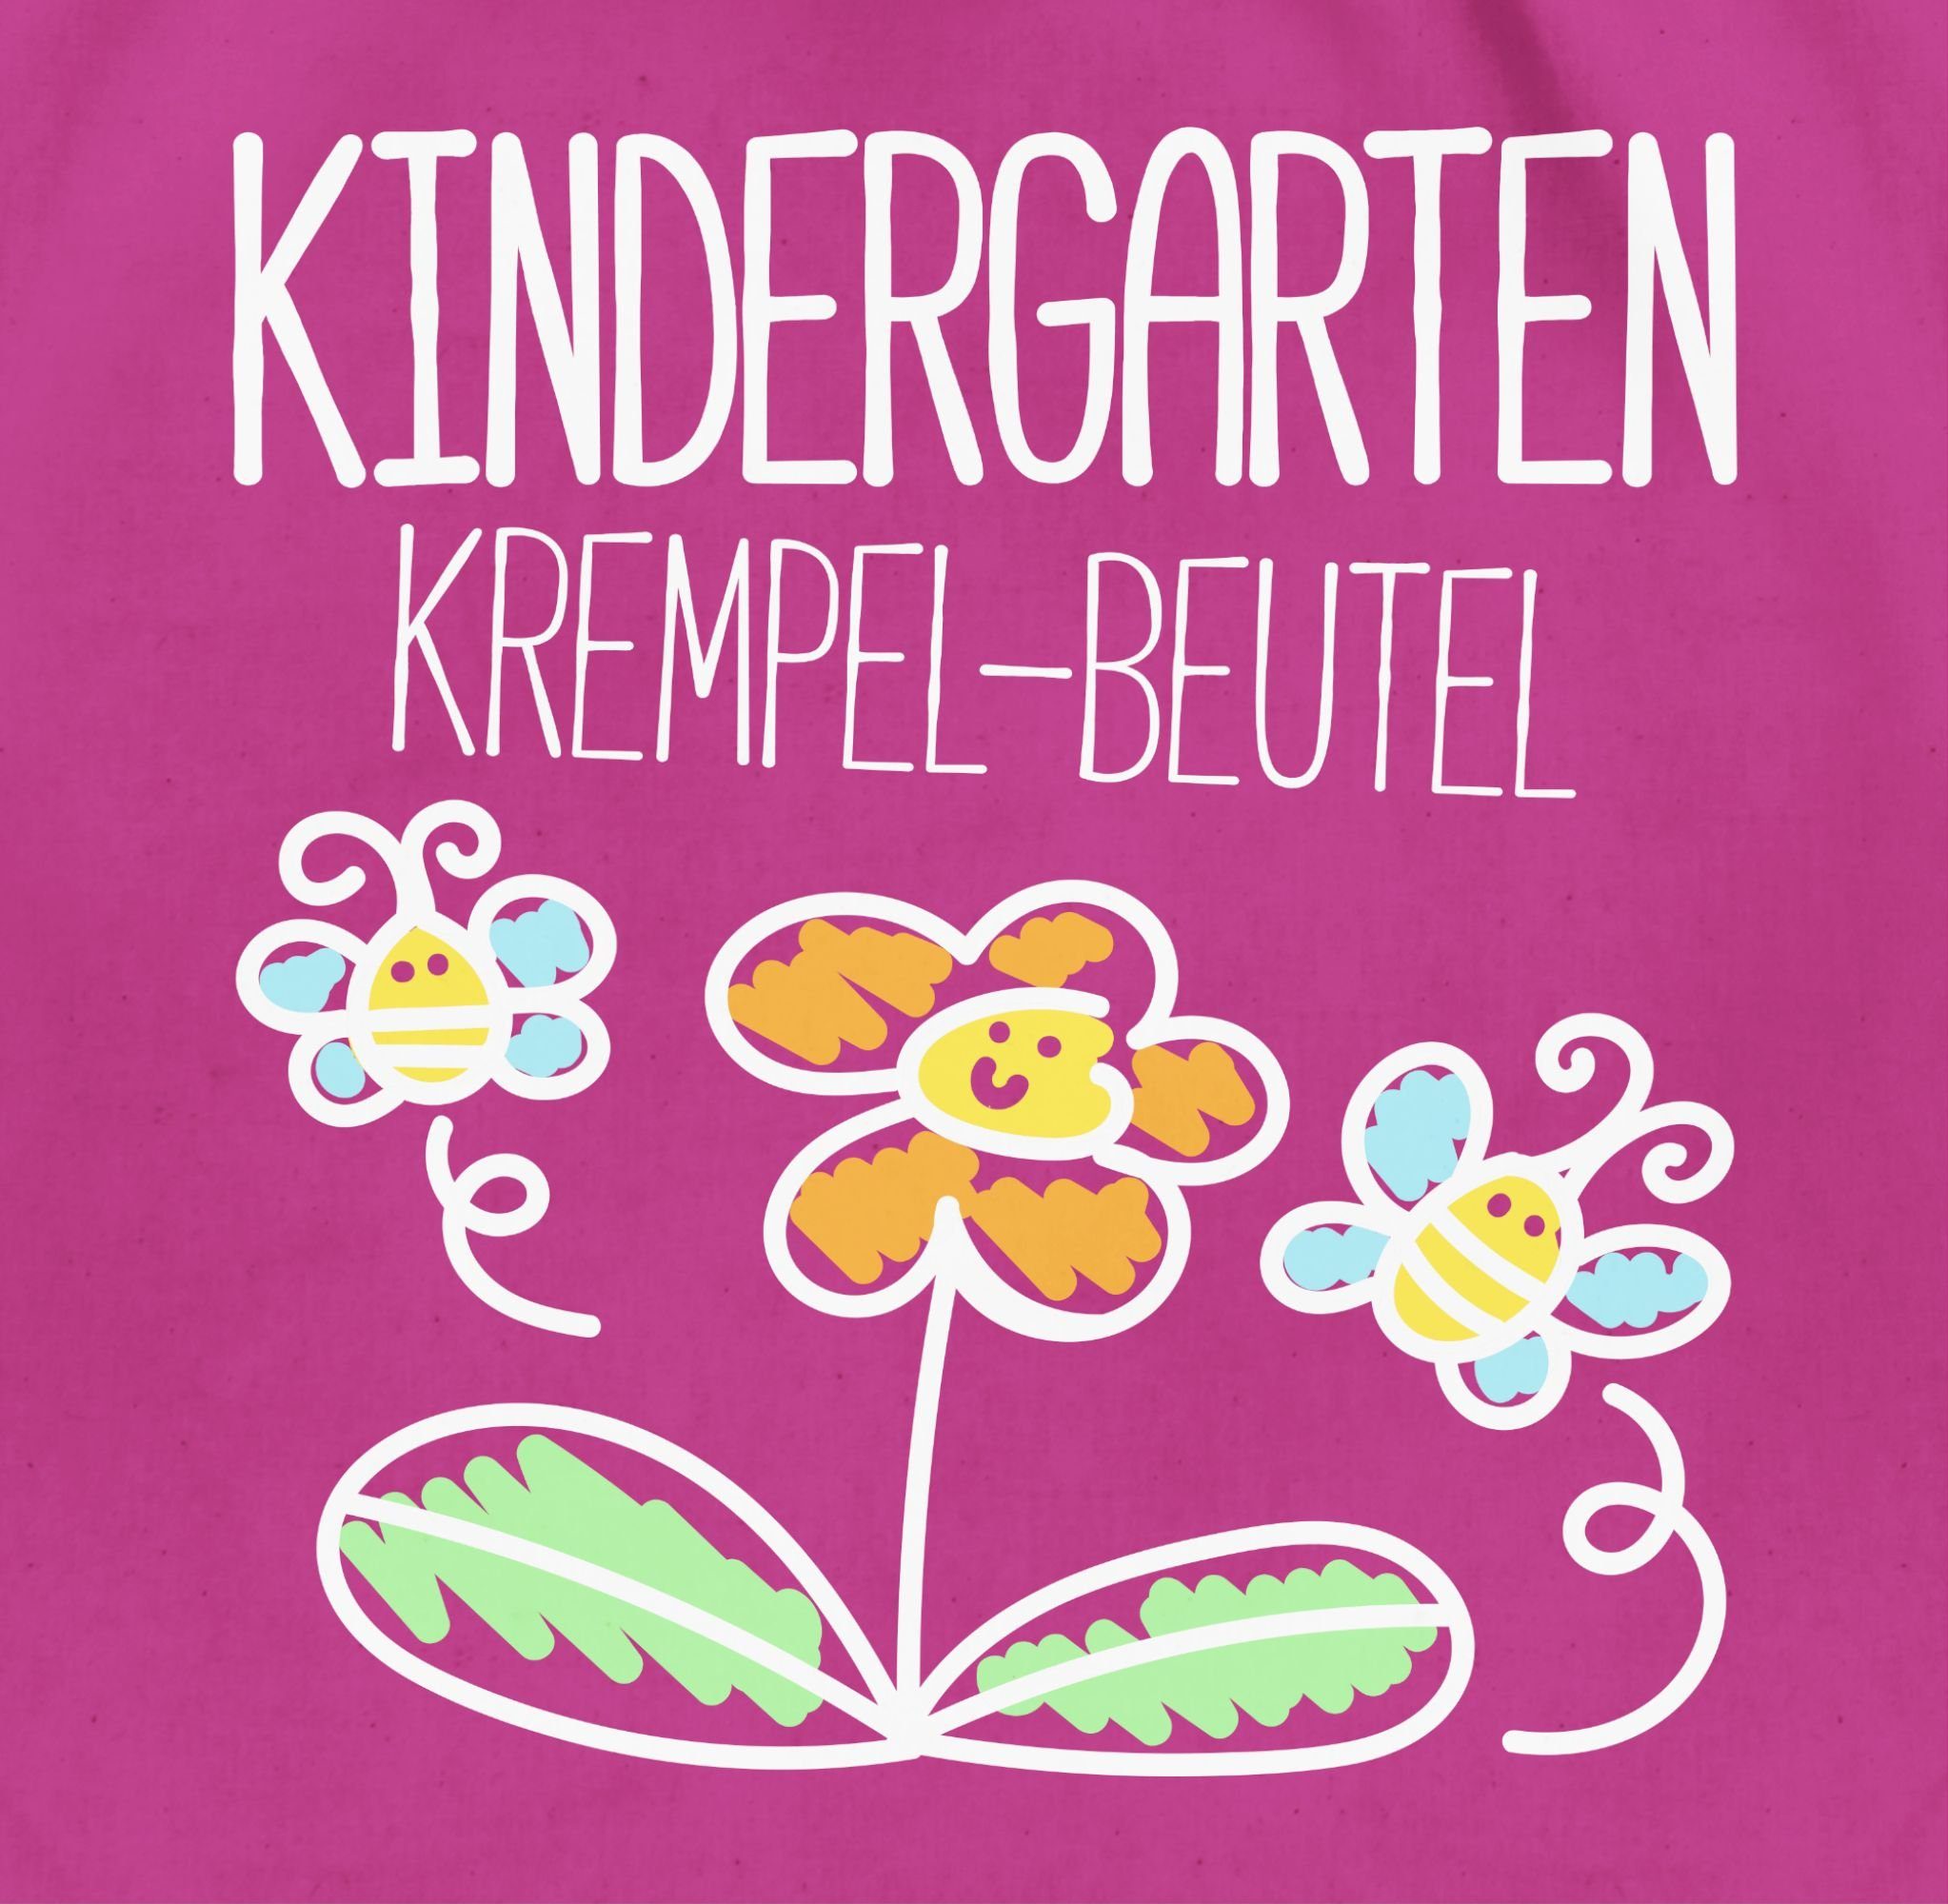 Turnbeutel Fuchsia Turnbeutel Shirtracer Kindergarten Krempel-Beutel, 01 bedruckt